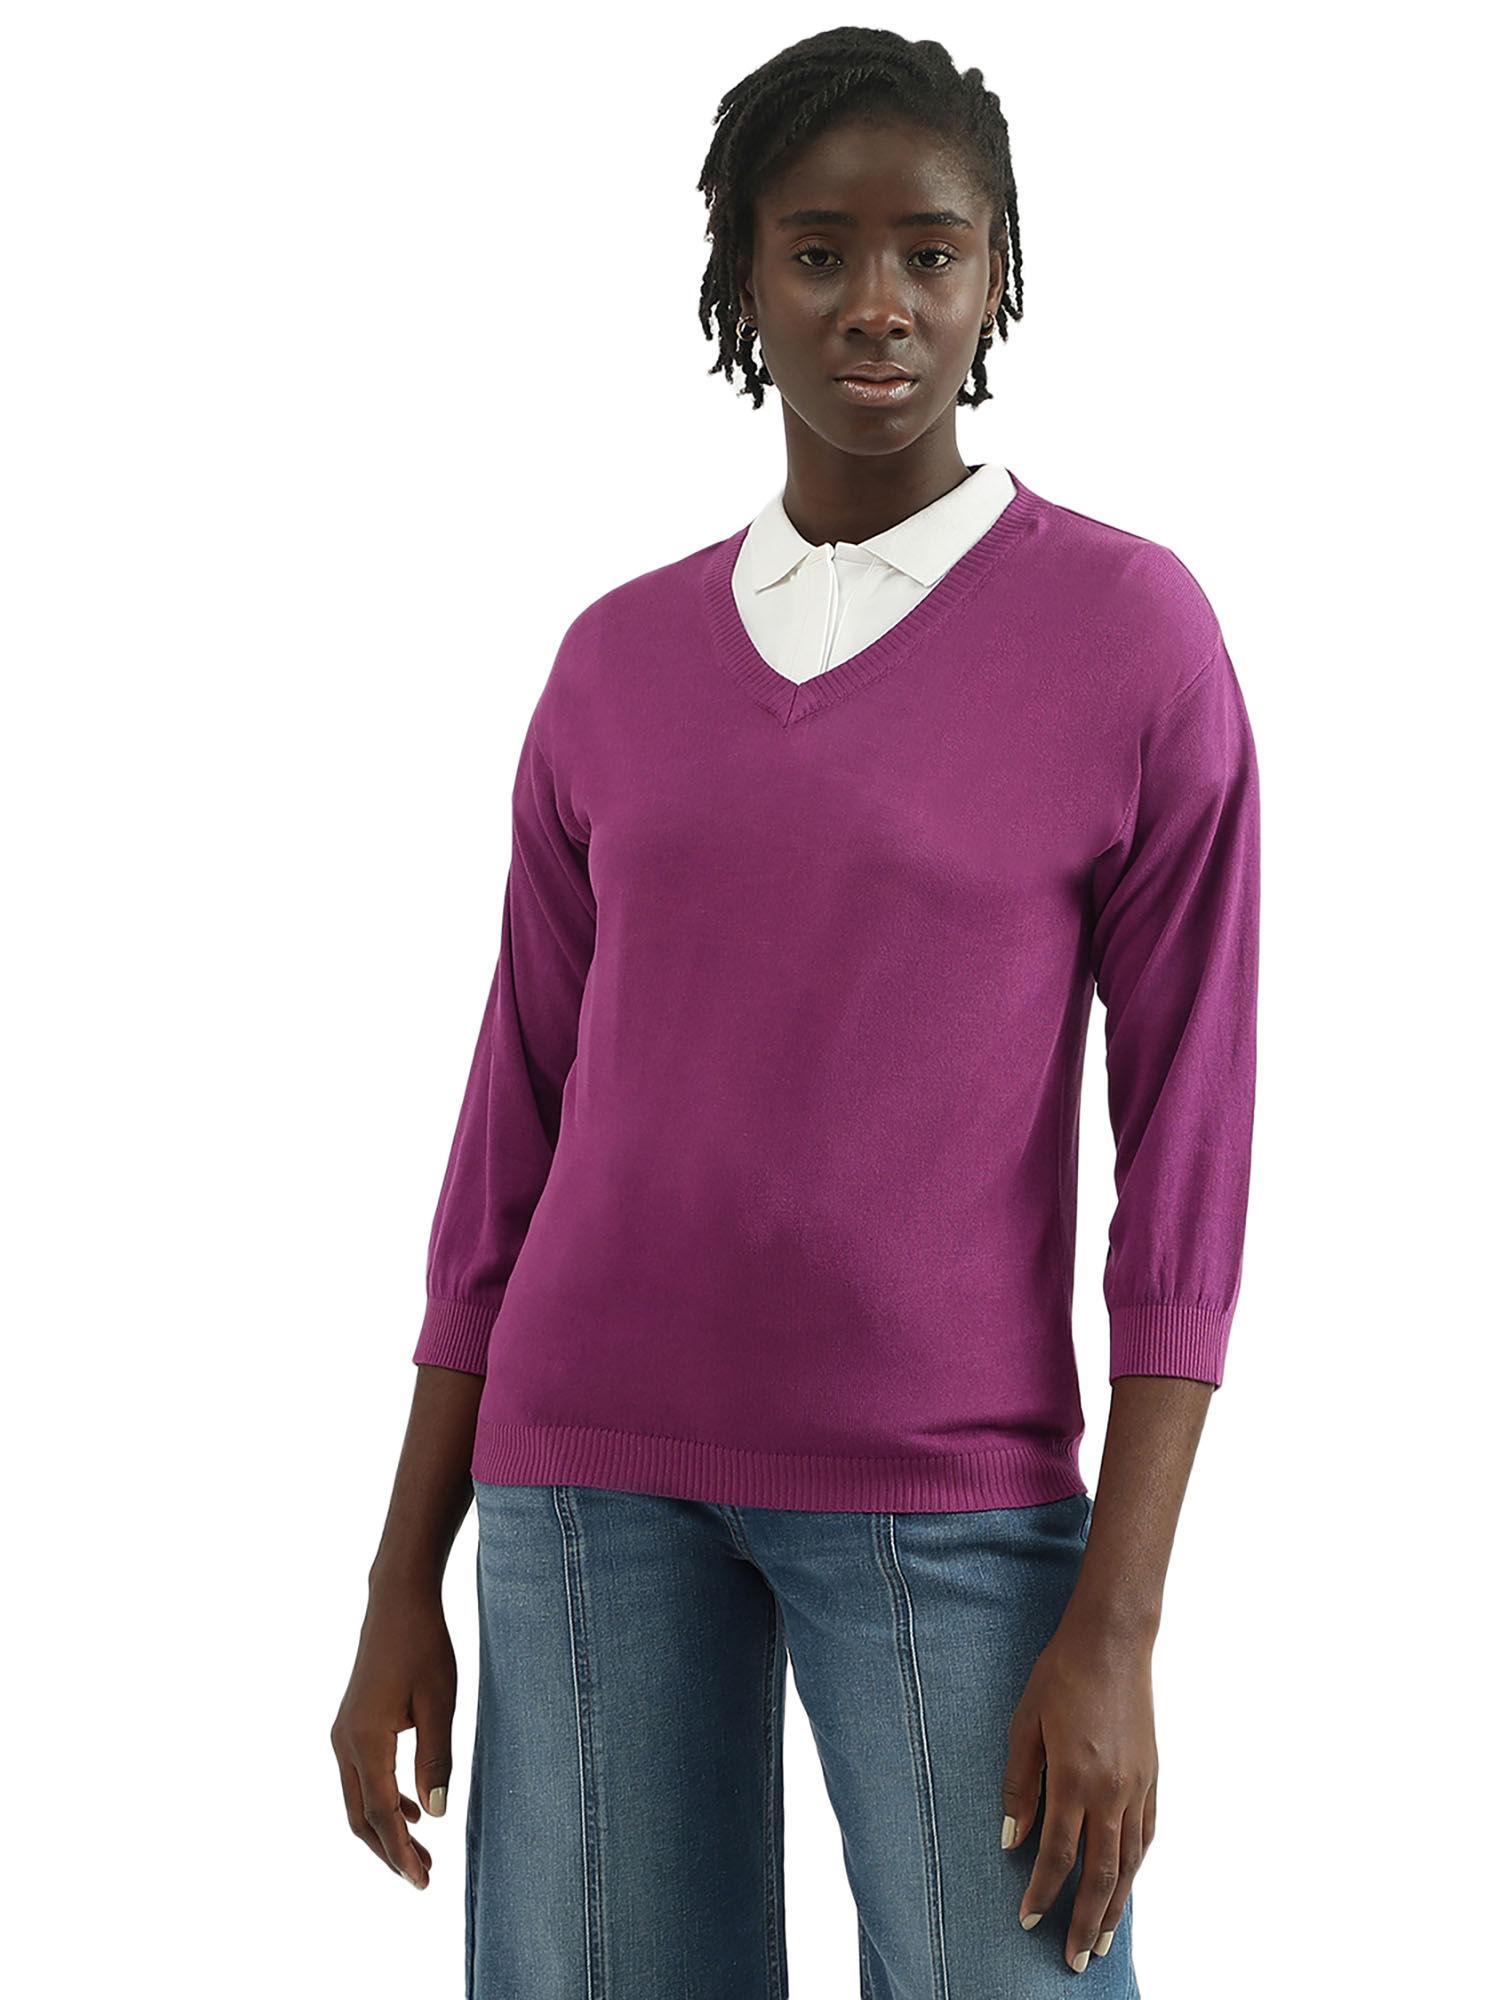 women knitted v-neck purple sweater